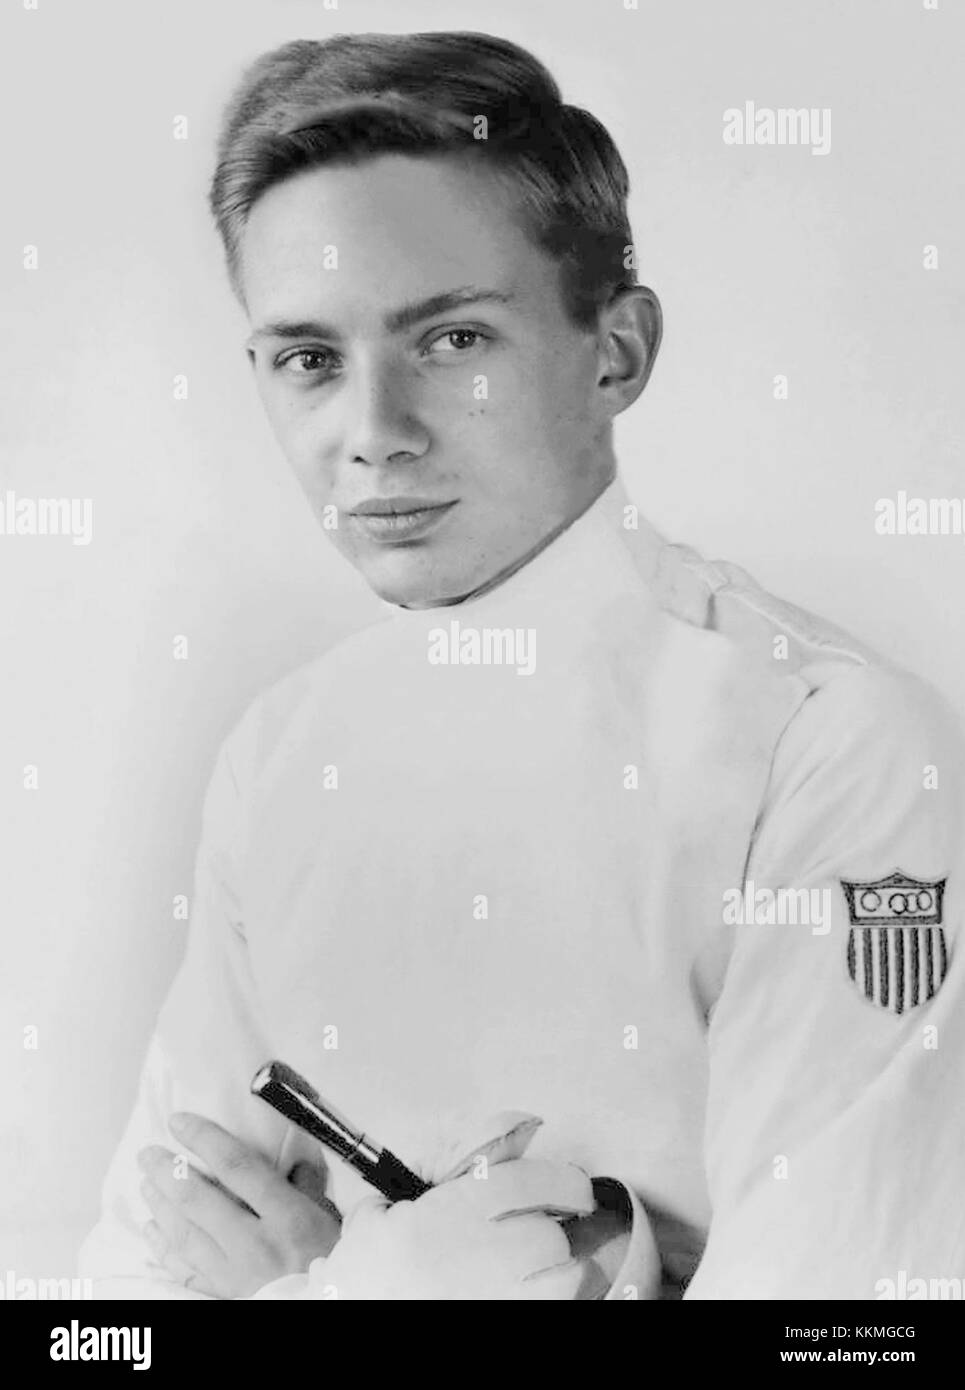 Donald Thompson fencer 1948 Stock Photo